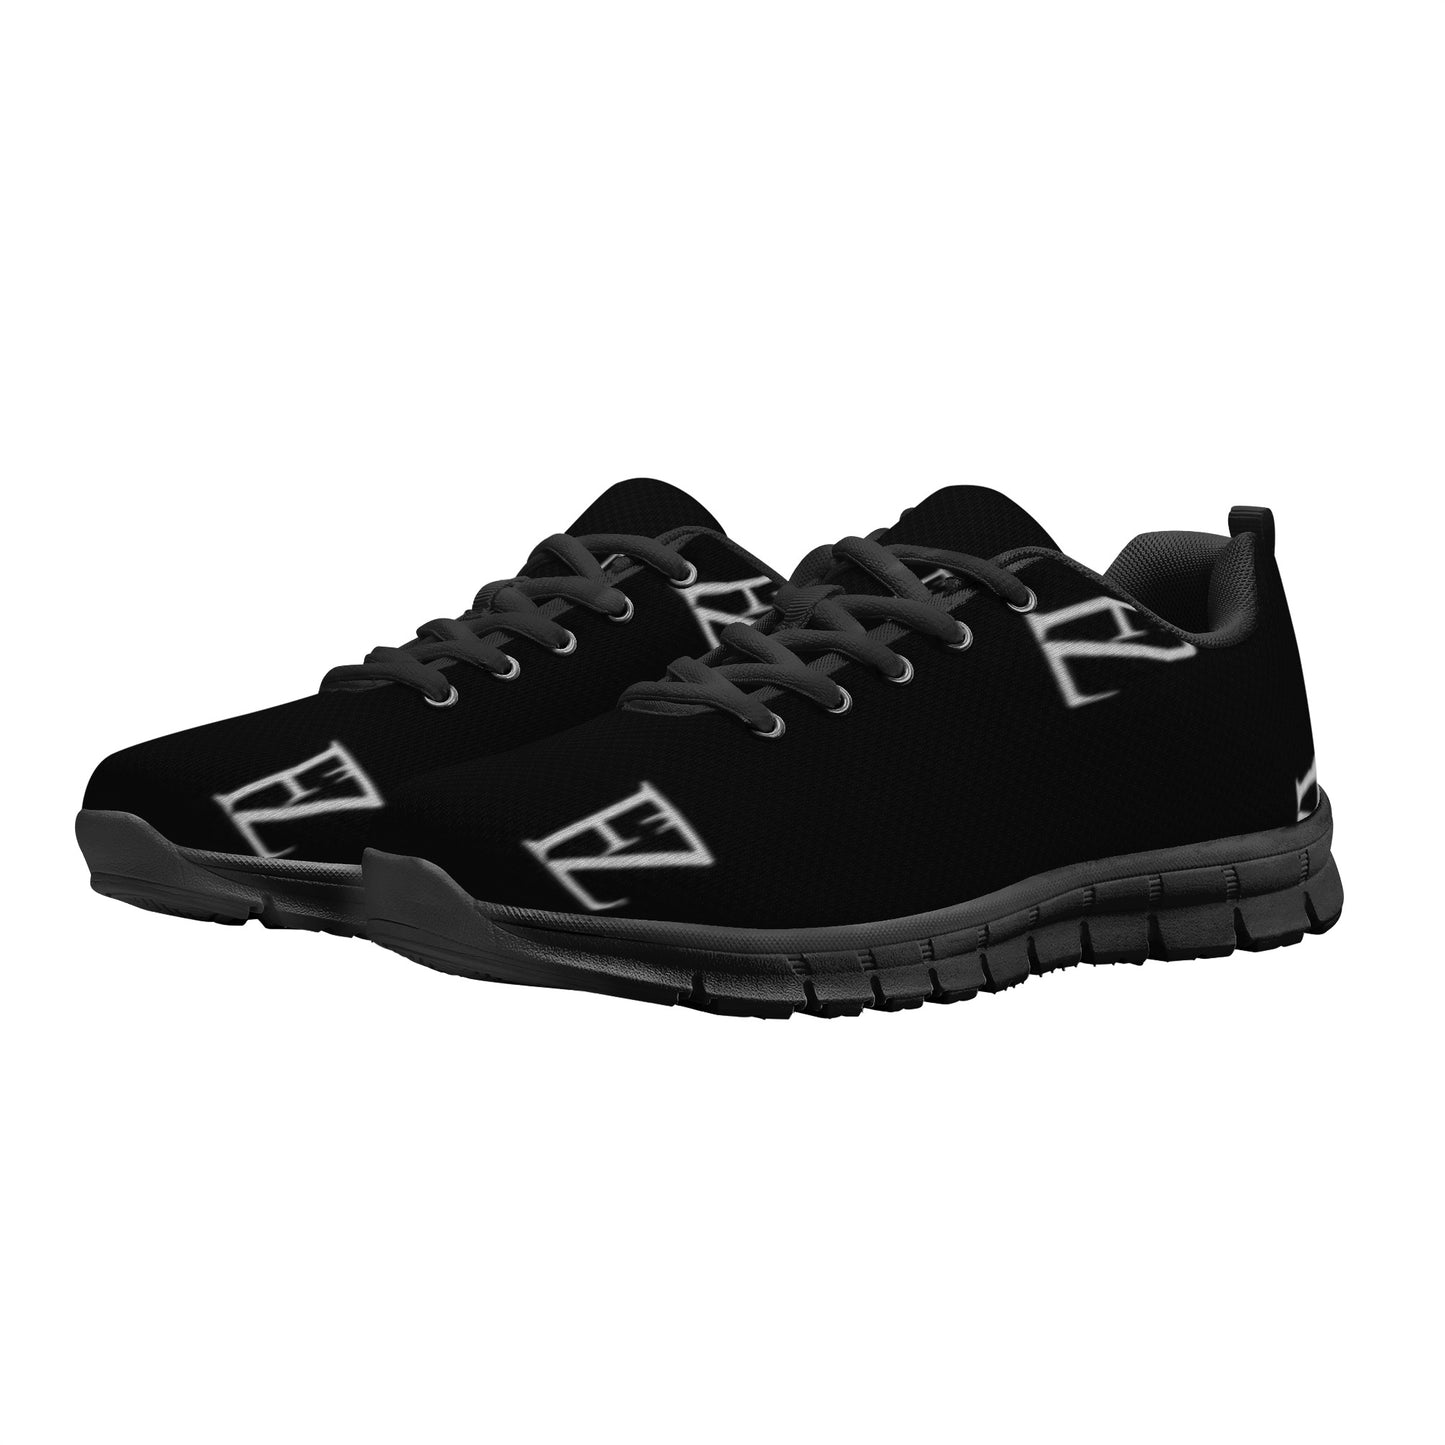 FZ Men's Running Shoes - FZwear